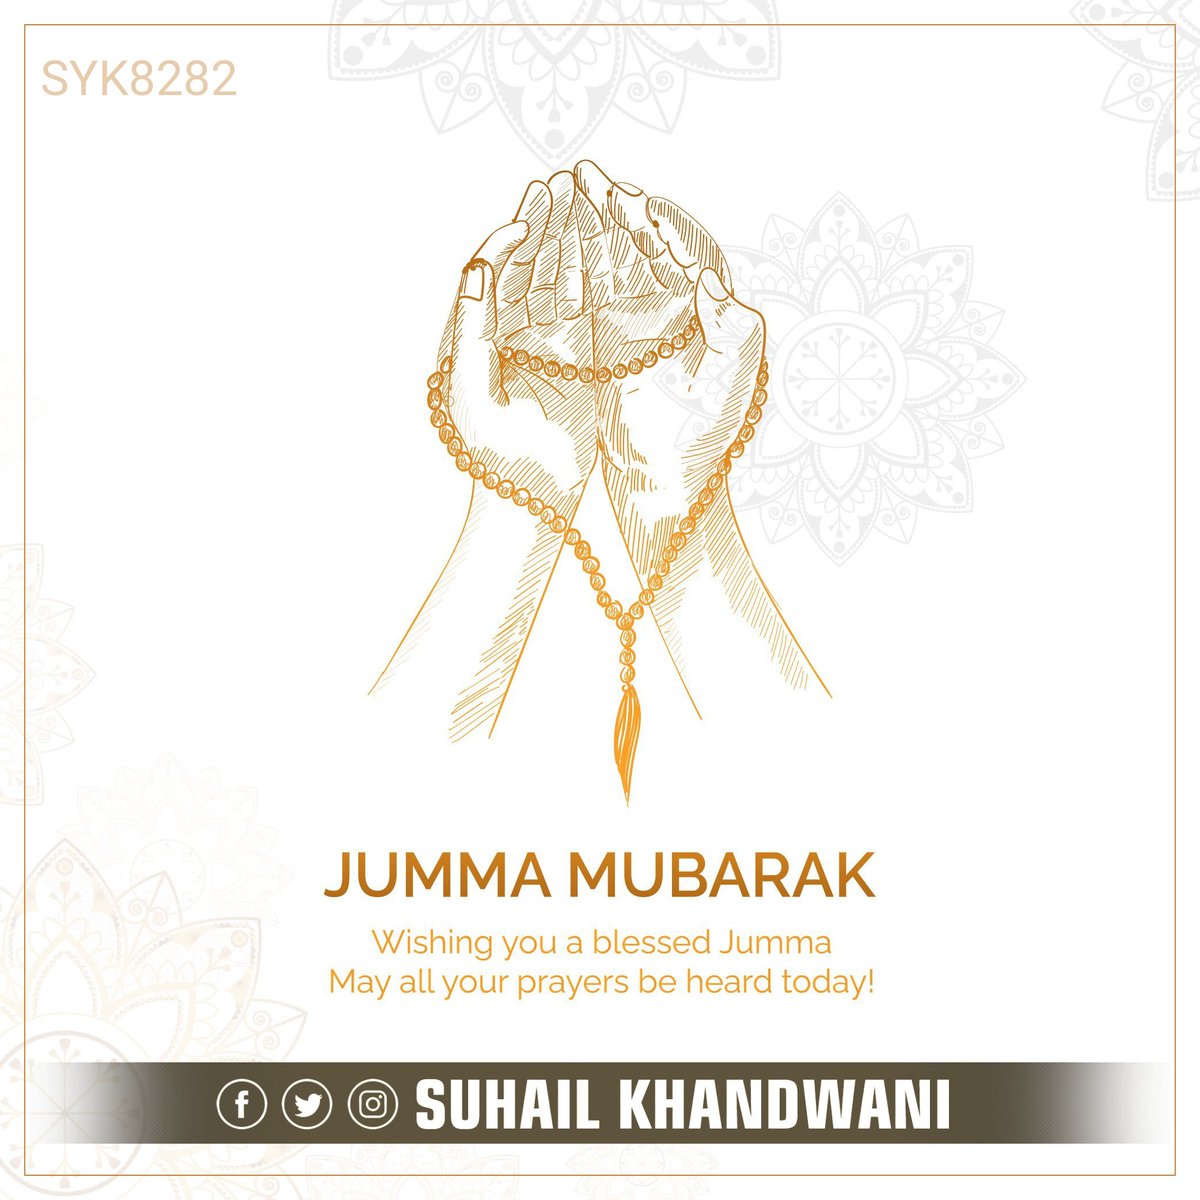 Jumma Mubarak. Have a blessed Friday!
#fridayfaith
#MahimDargah #HajiAliDargah
#SuhailKhandwani